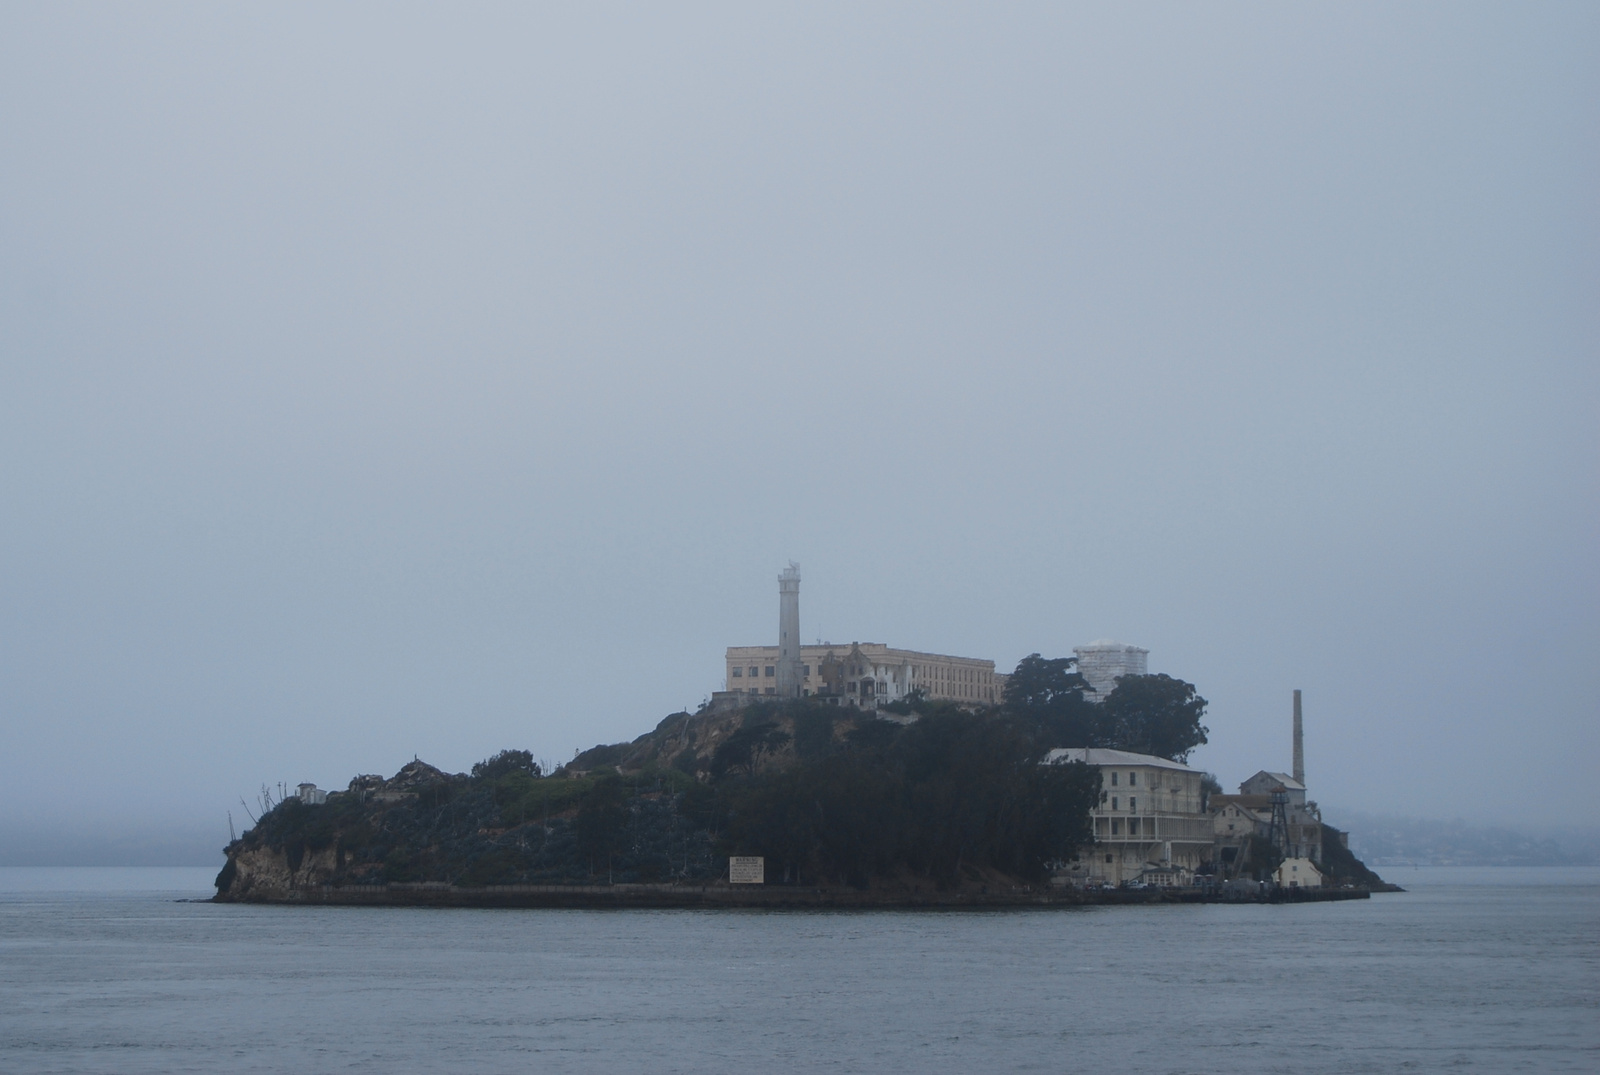 US12 0929 010 Alcatraz, San Francisco, CA